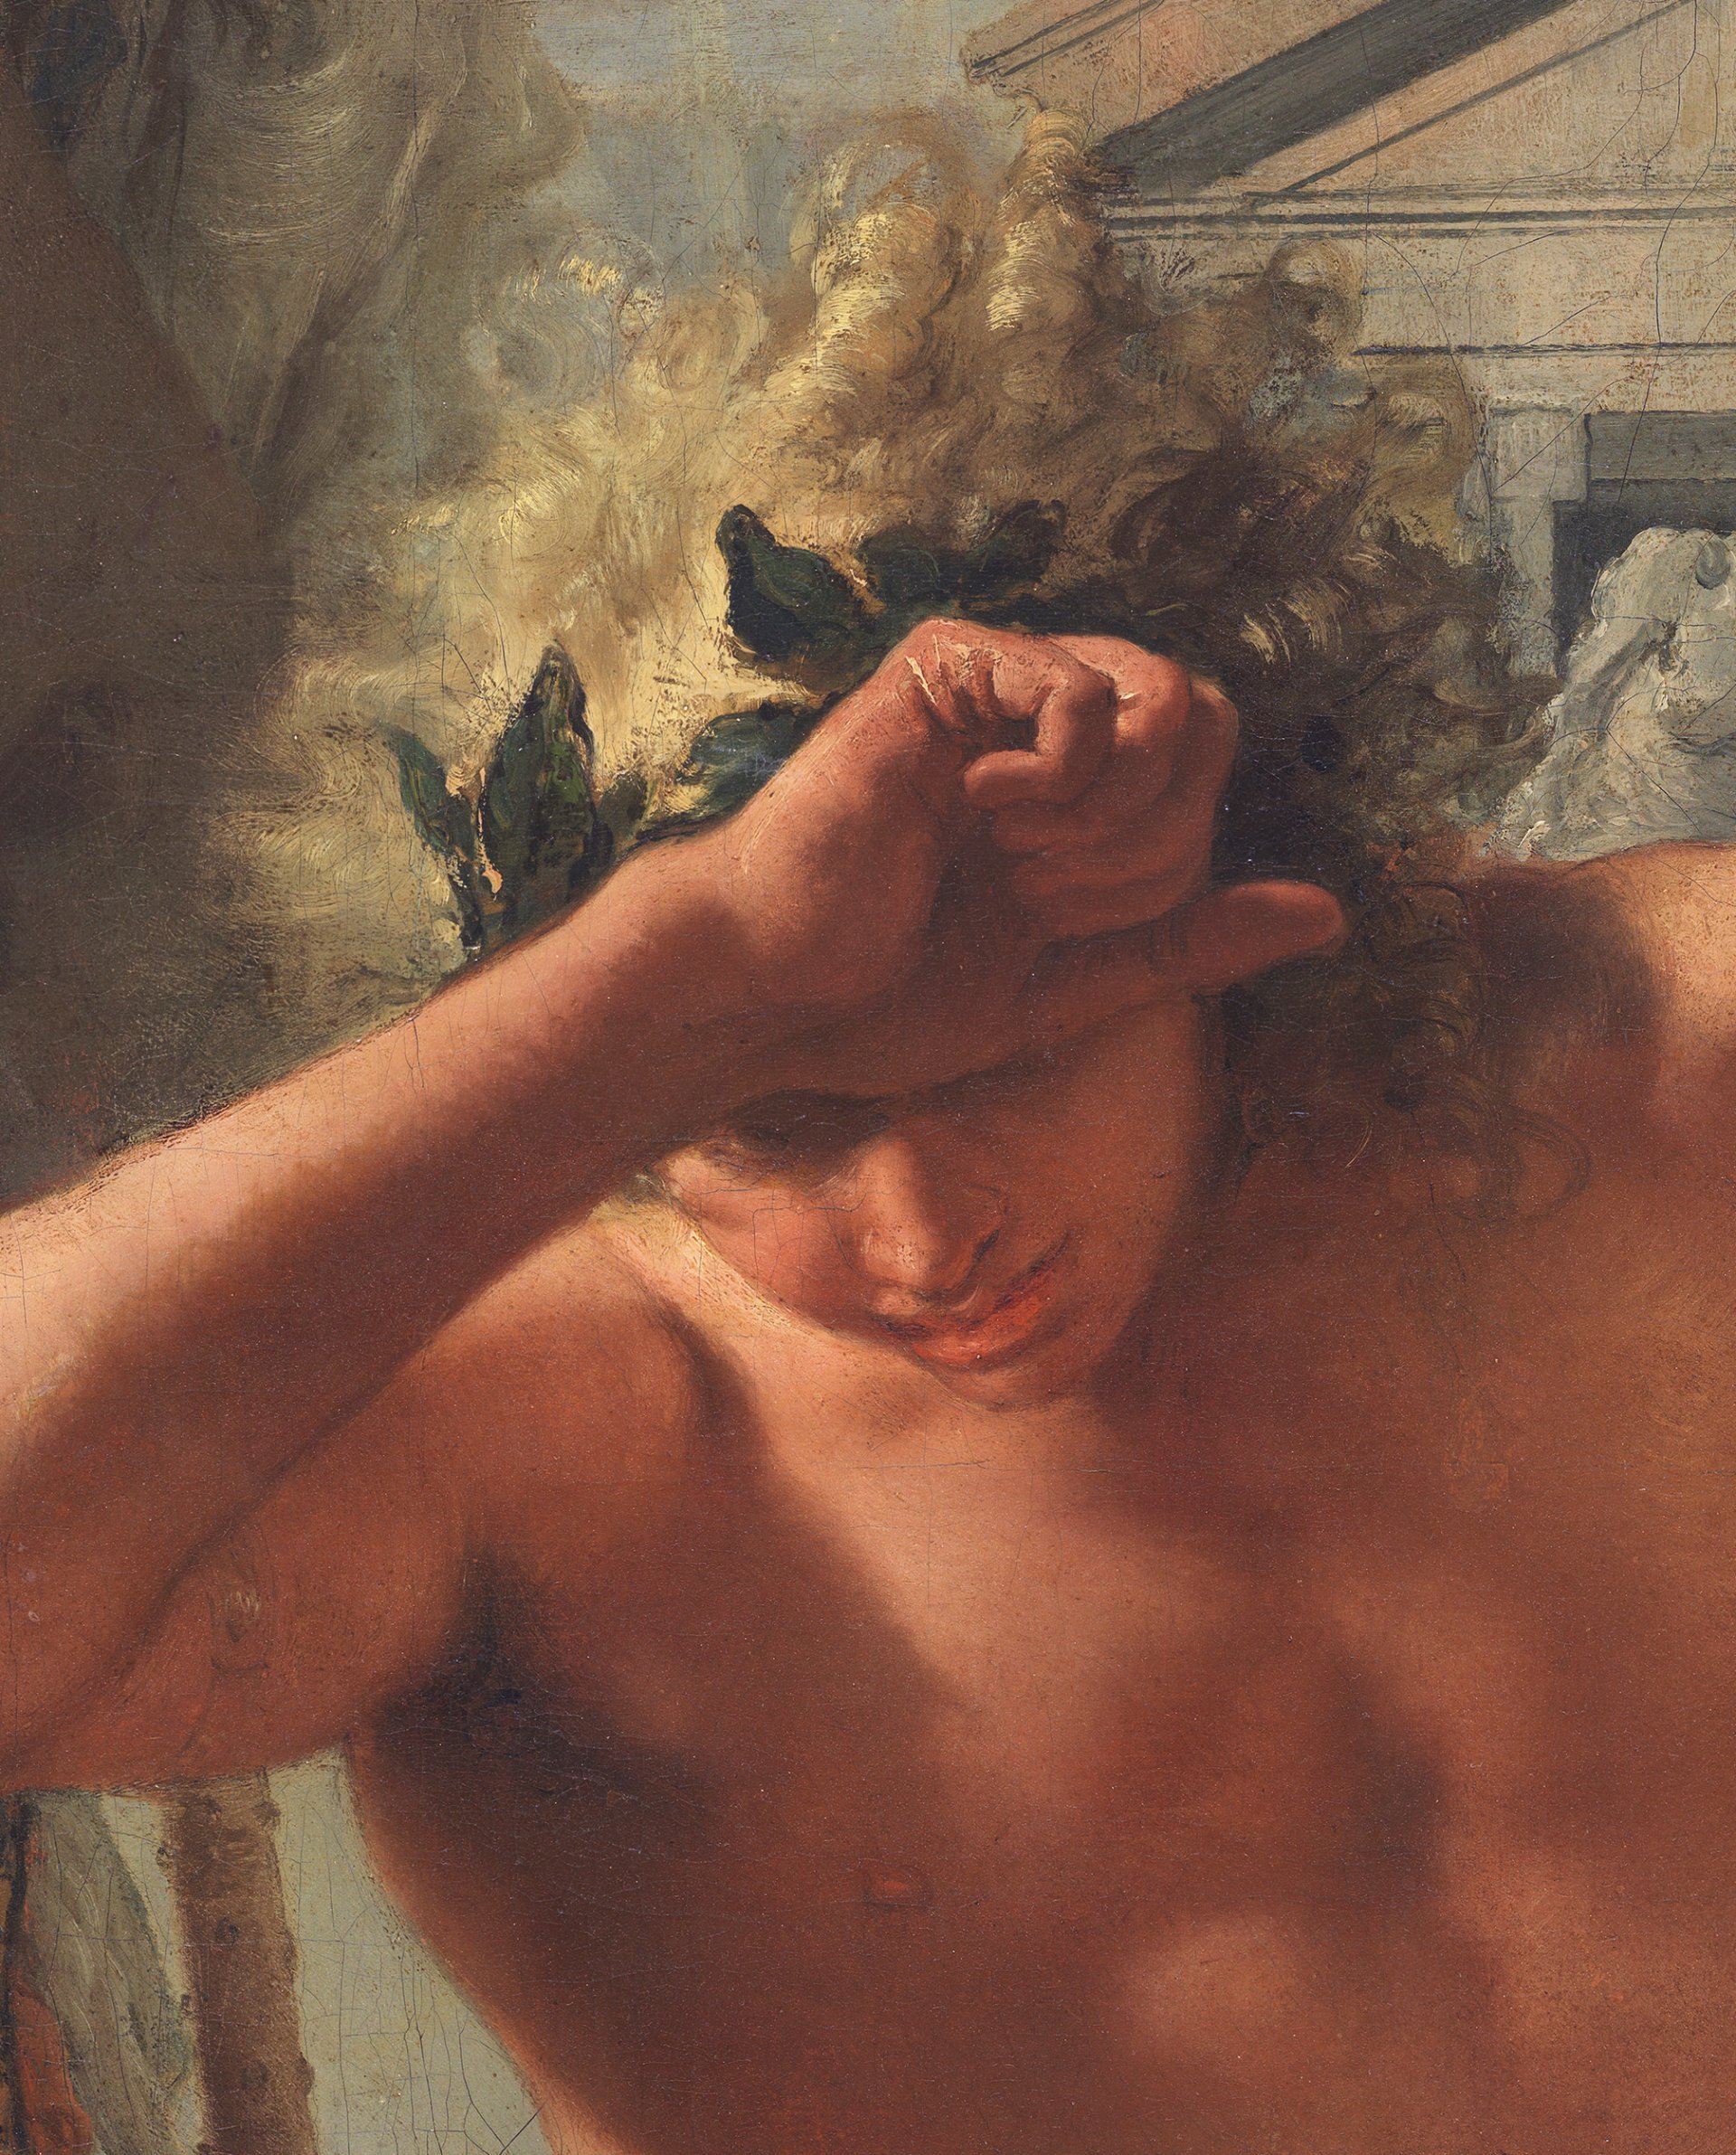 Detalle de Apolo en imagen visible de la obra de Giambattista Tiepolo